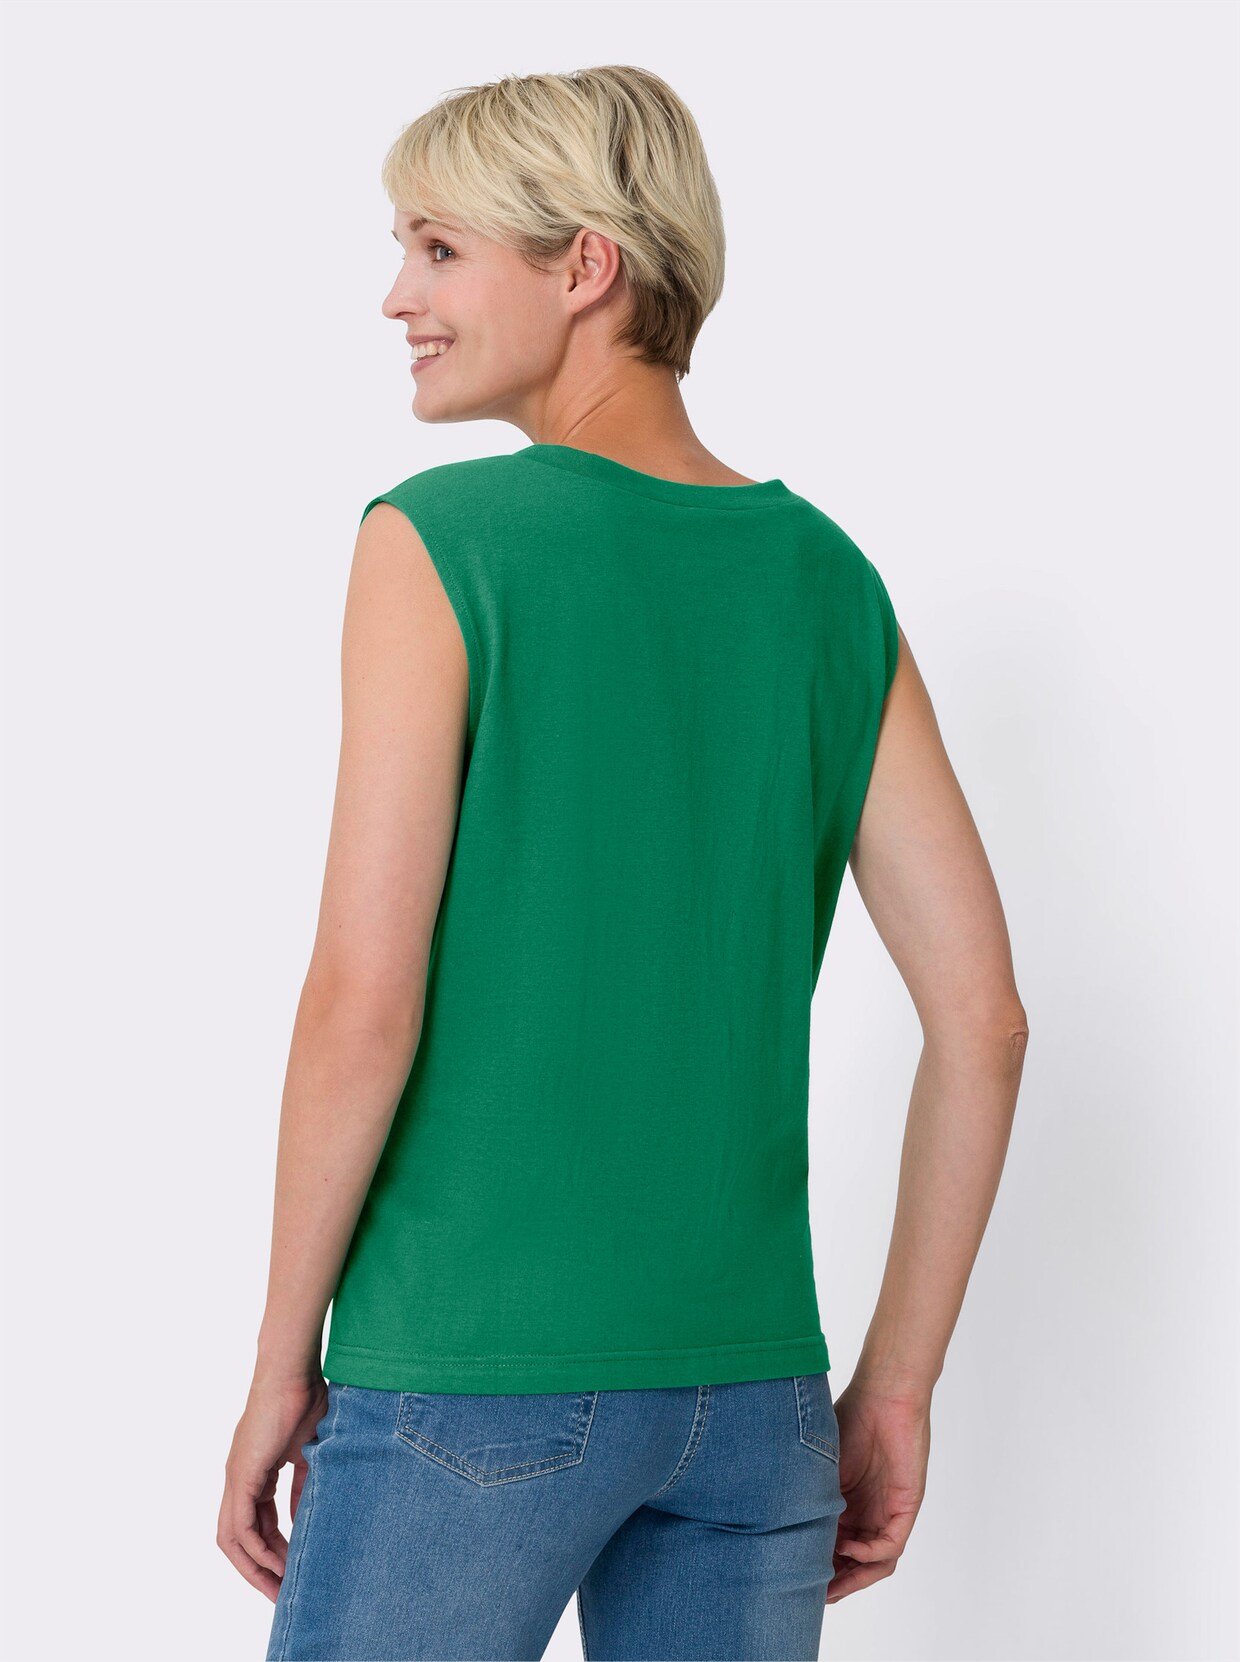 Shirttop - grün